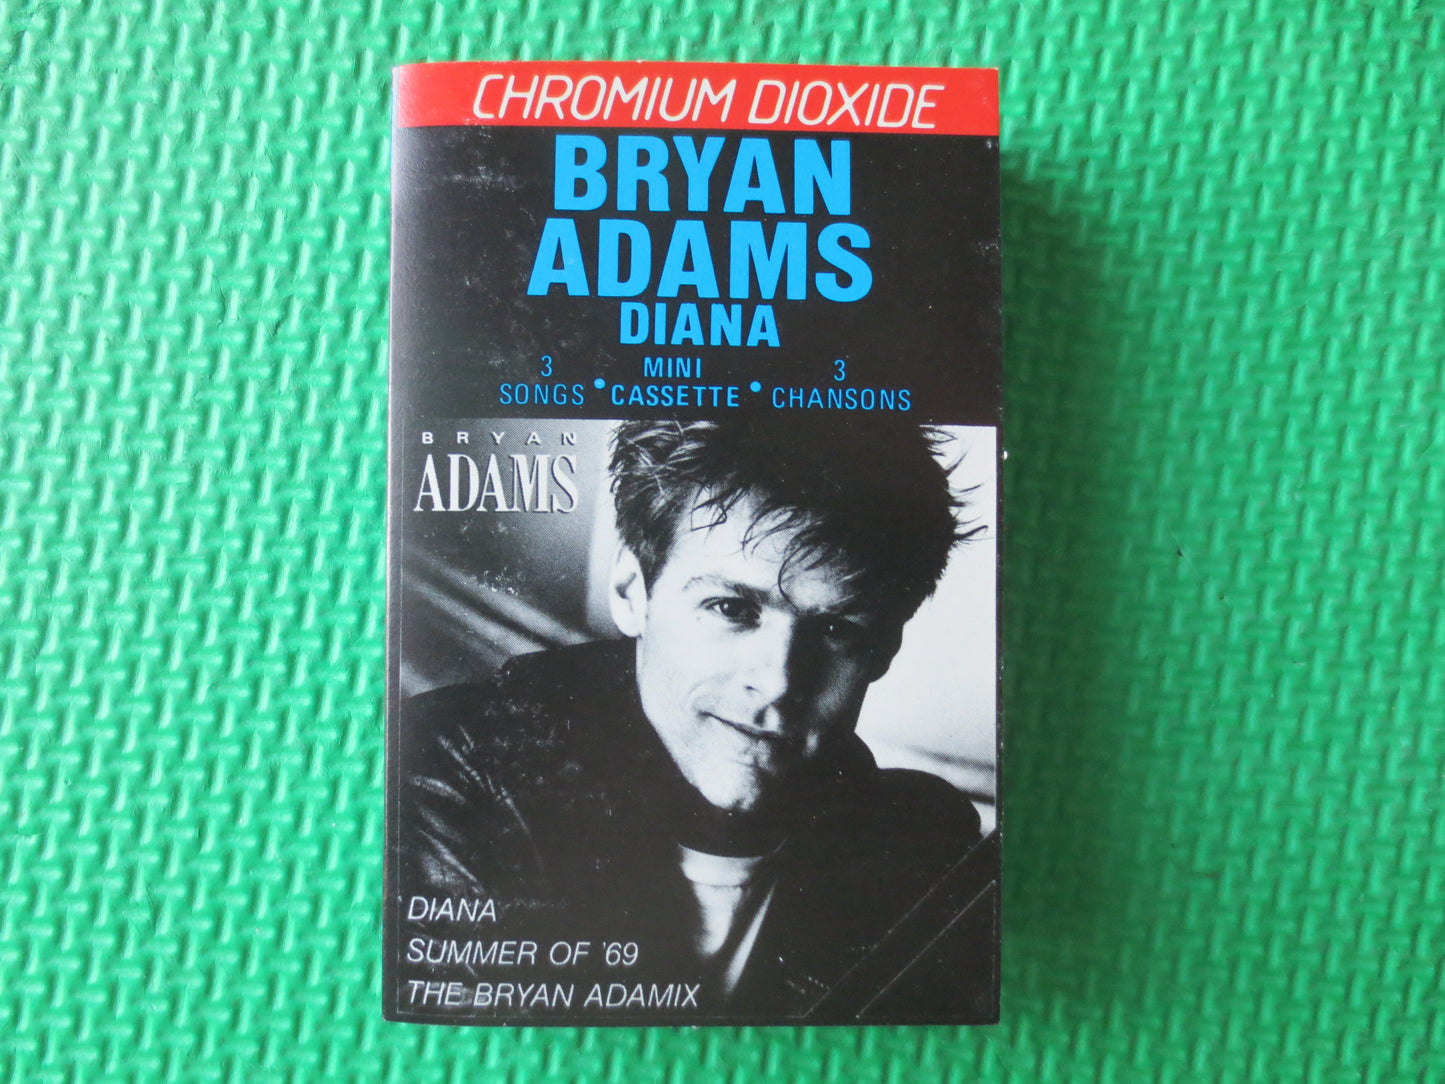 BRYAN ADAMS Tape, DIANA, Bryan Adams Album, Bryan Adams Music, Bryan Adams, Tape Cassette, Music Cassette, 1985 Cassette